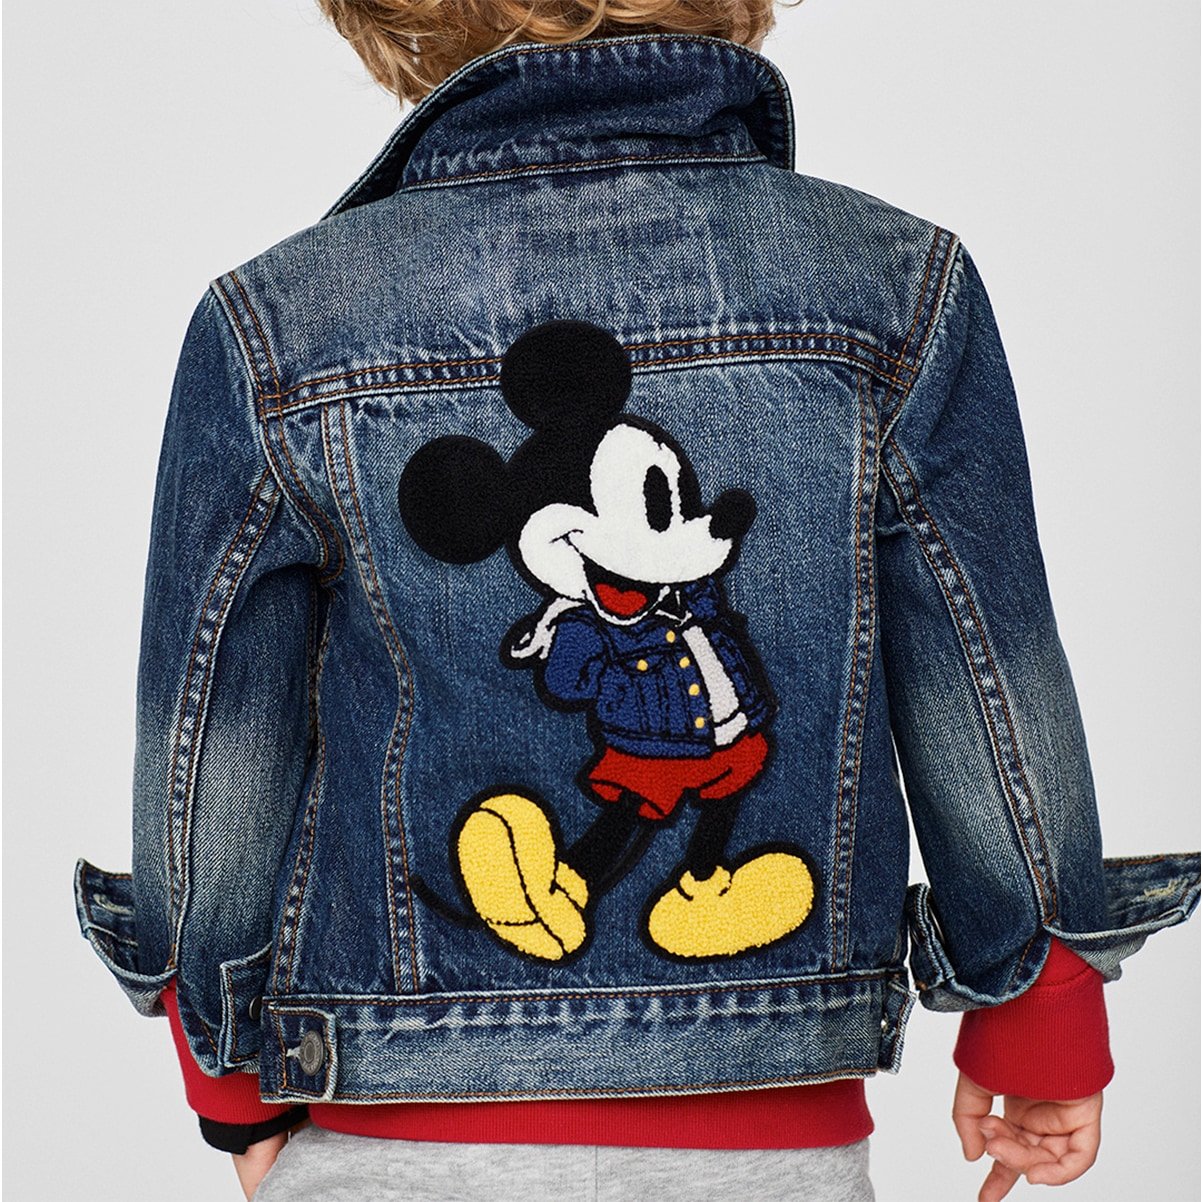 baby gap mickey mouse jean jacket